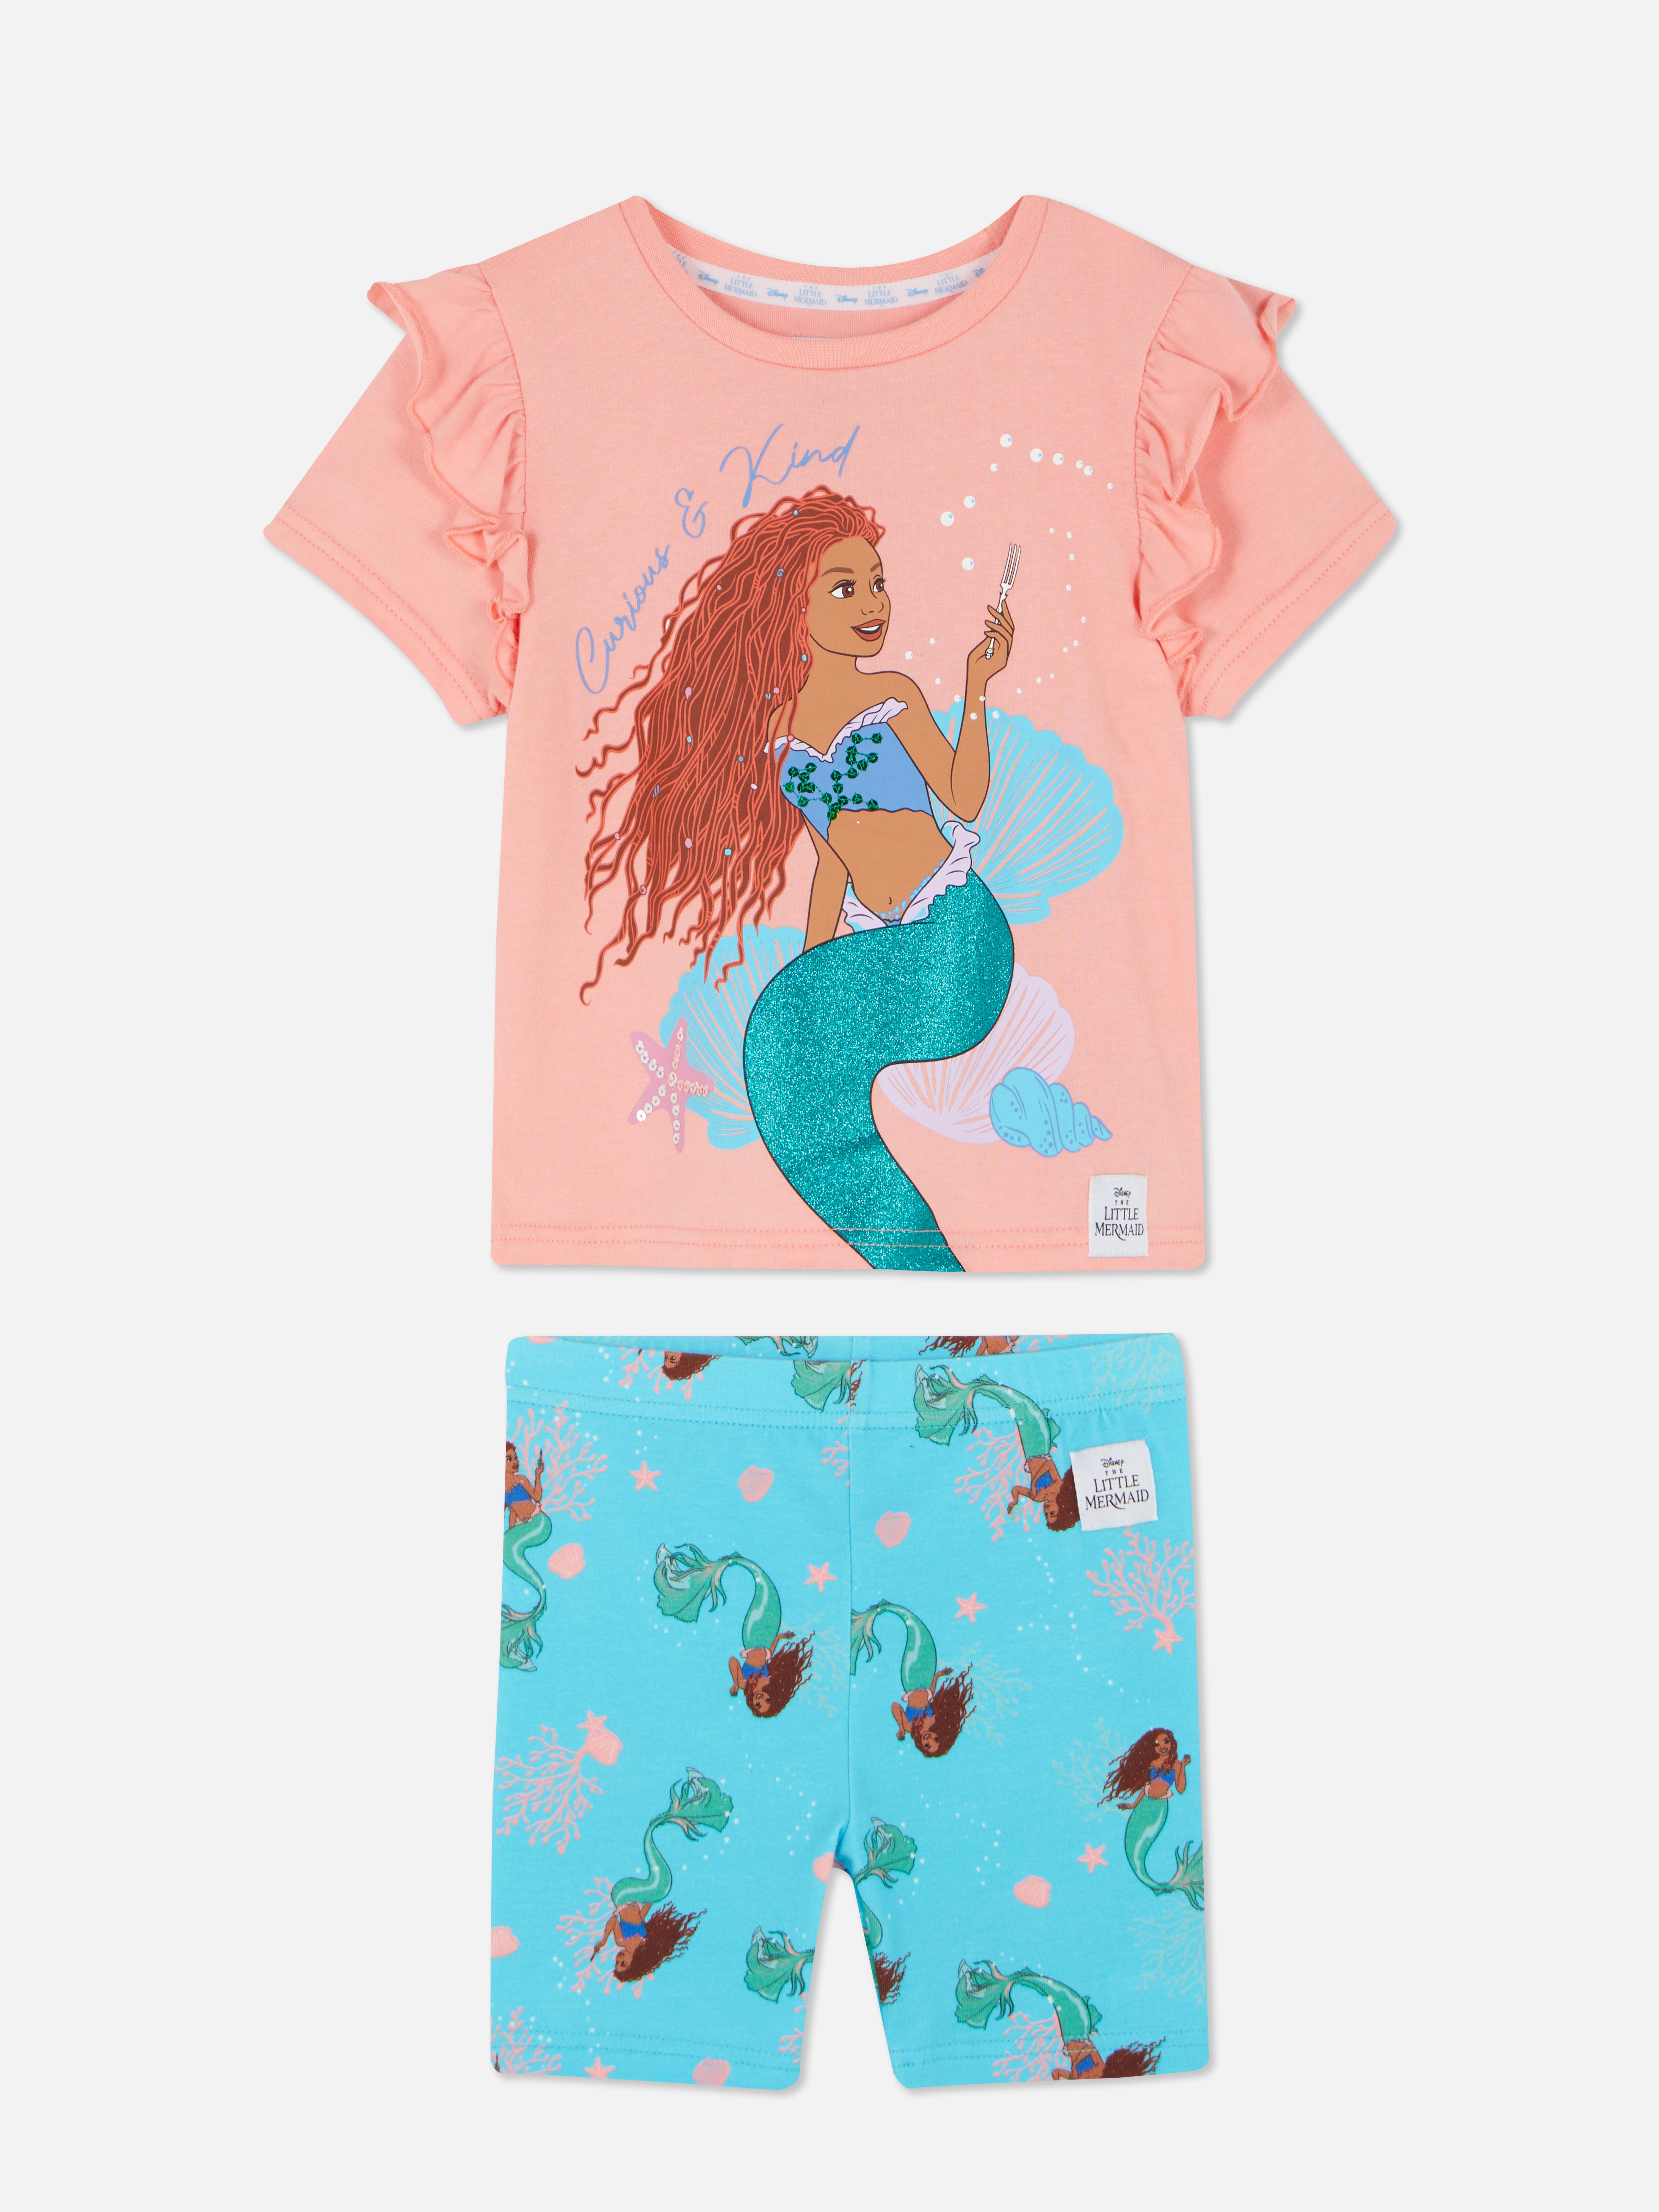 Disney’s The Little Mermaid T-shirt and Shorts Set